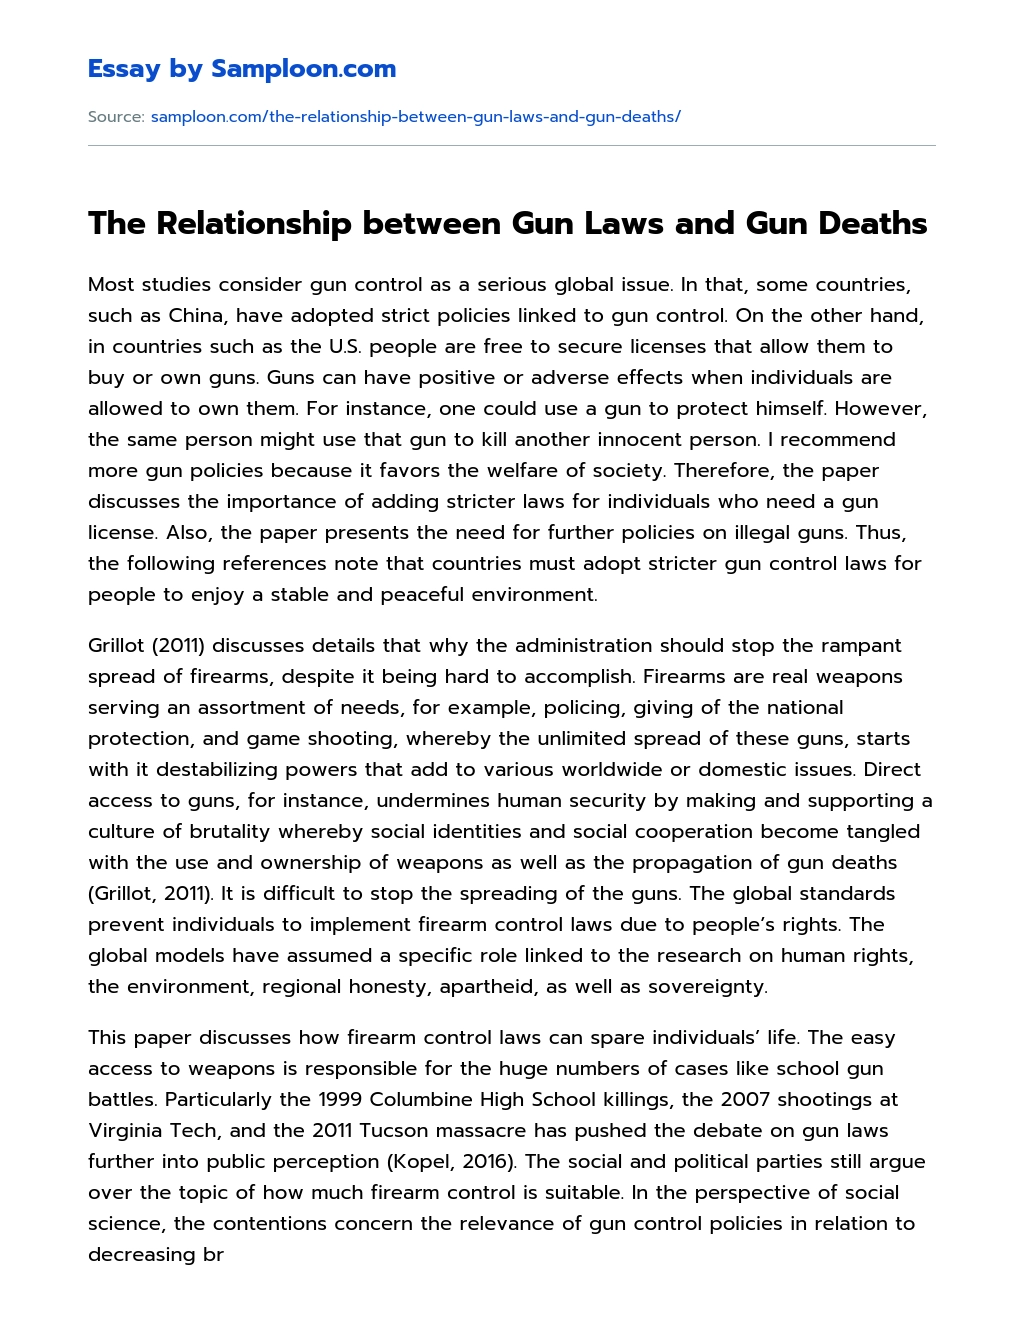 The Relationship between Gun Laws and Gun Deaths essay